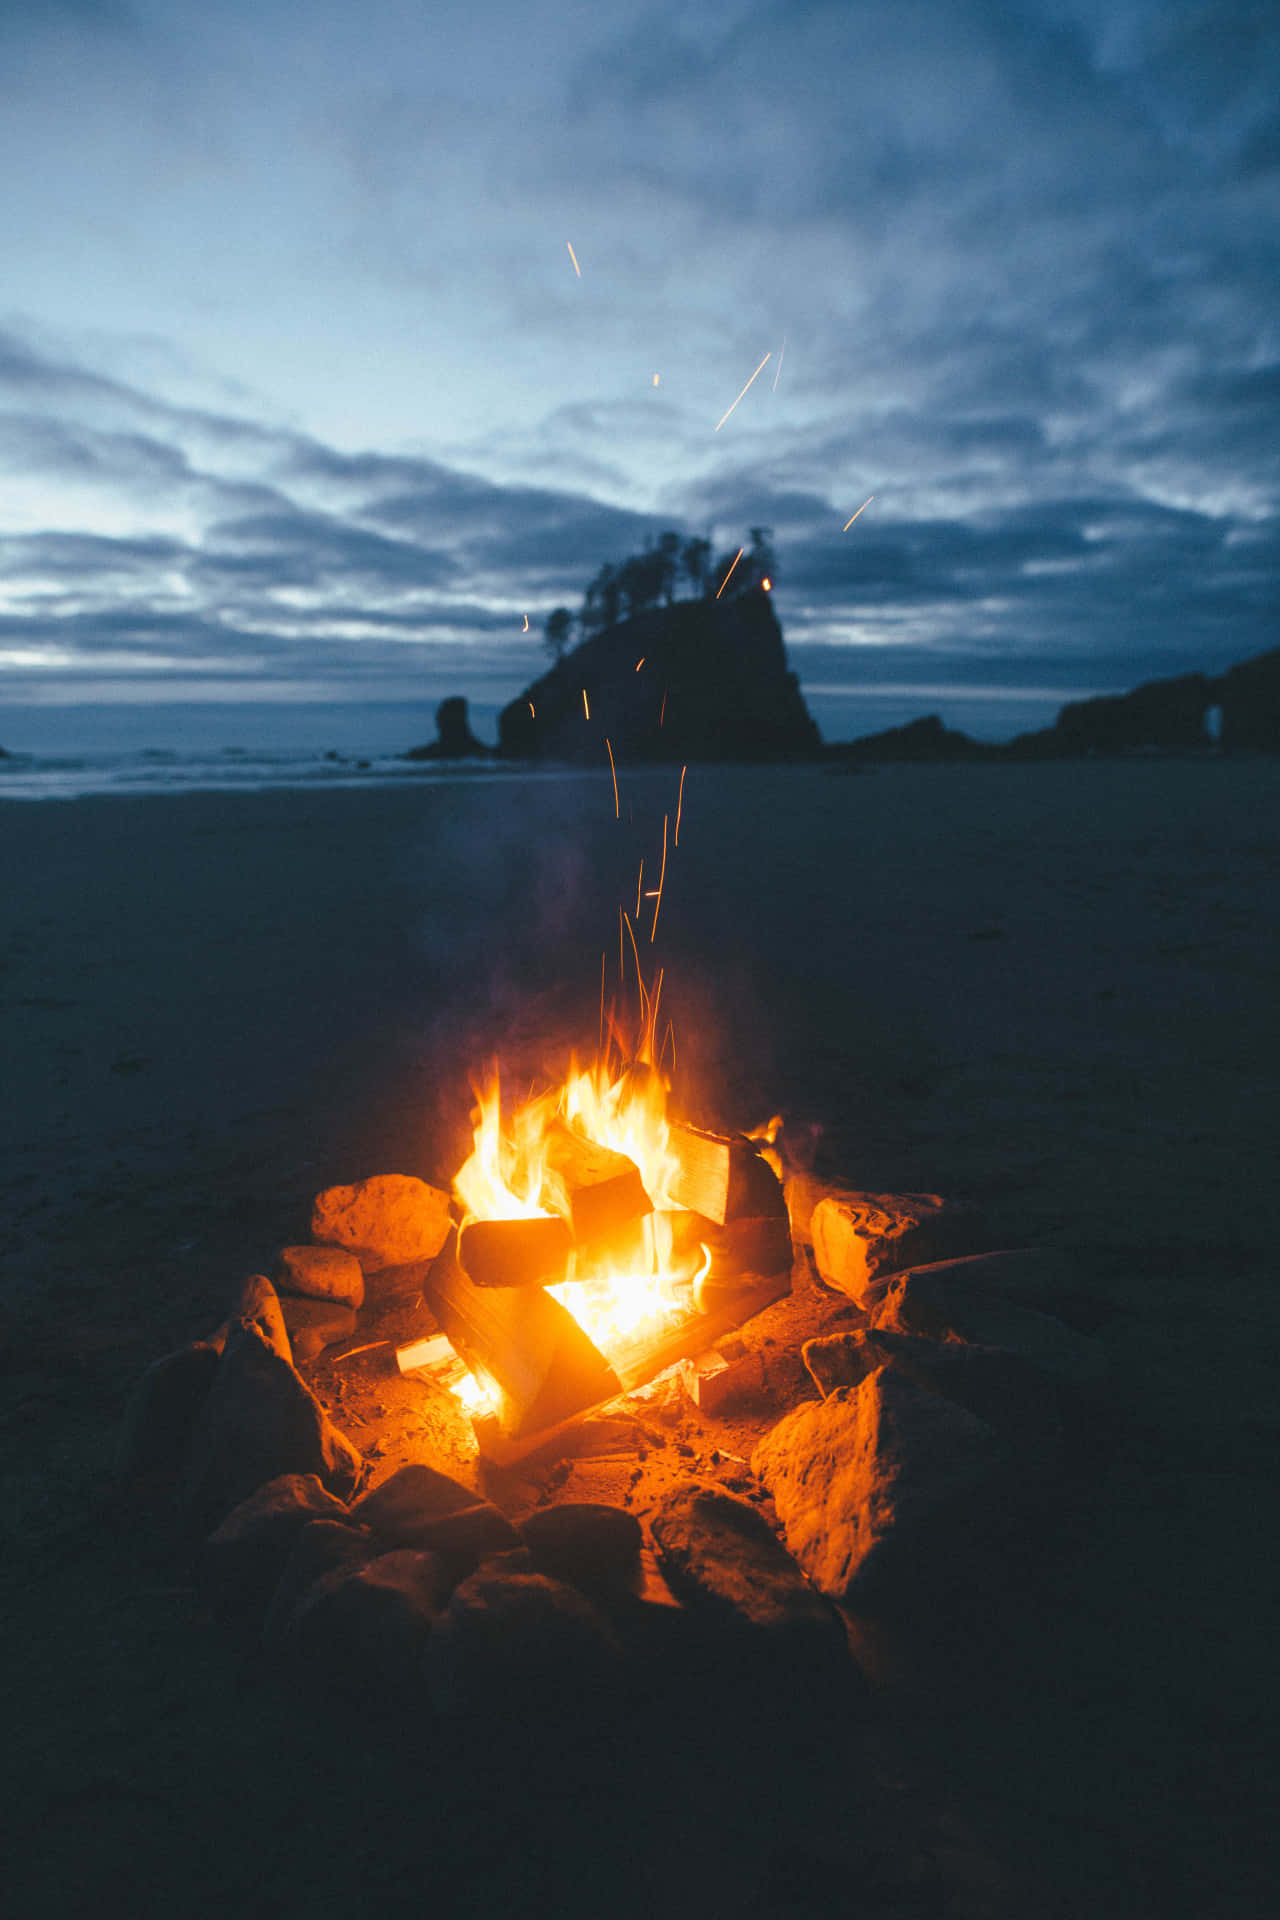 Warm Beach Campfire Under The Starry Night Sky Wallpaper